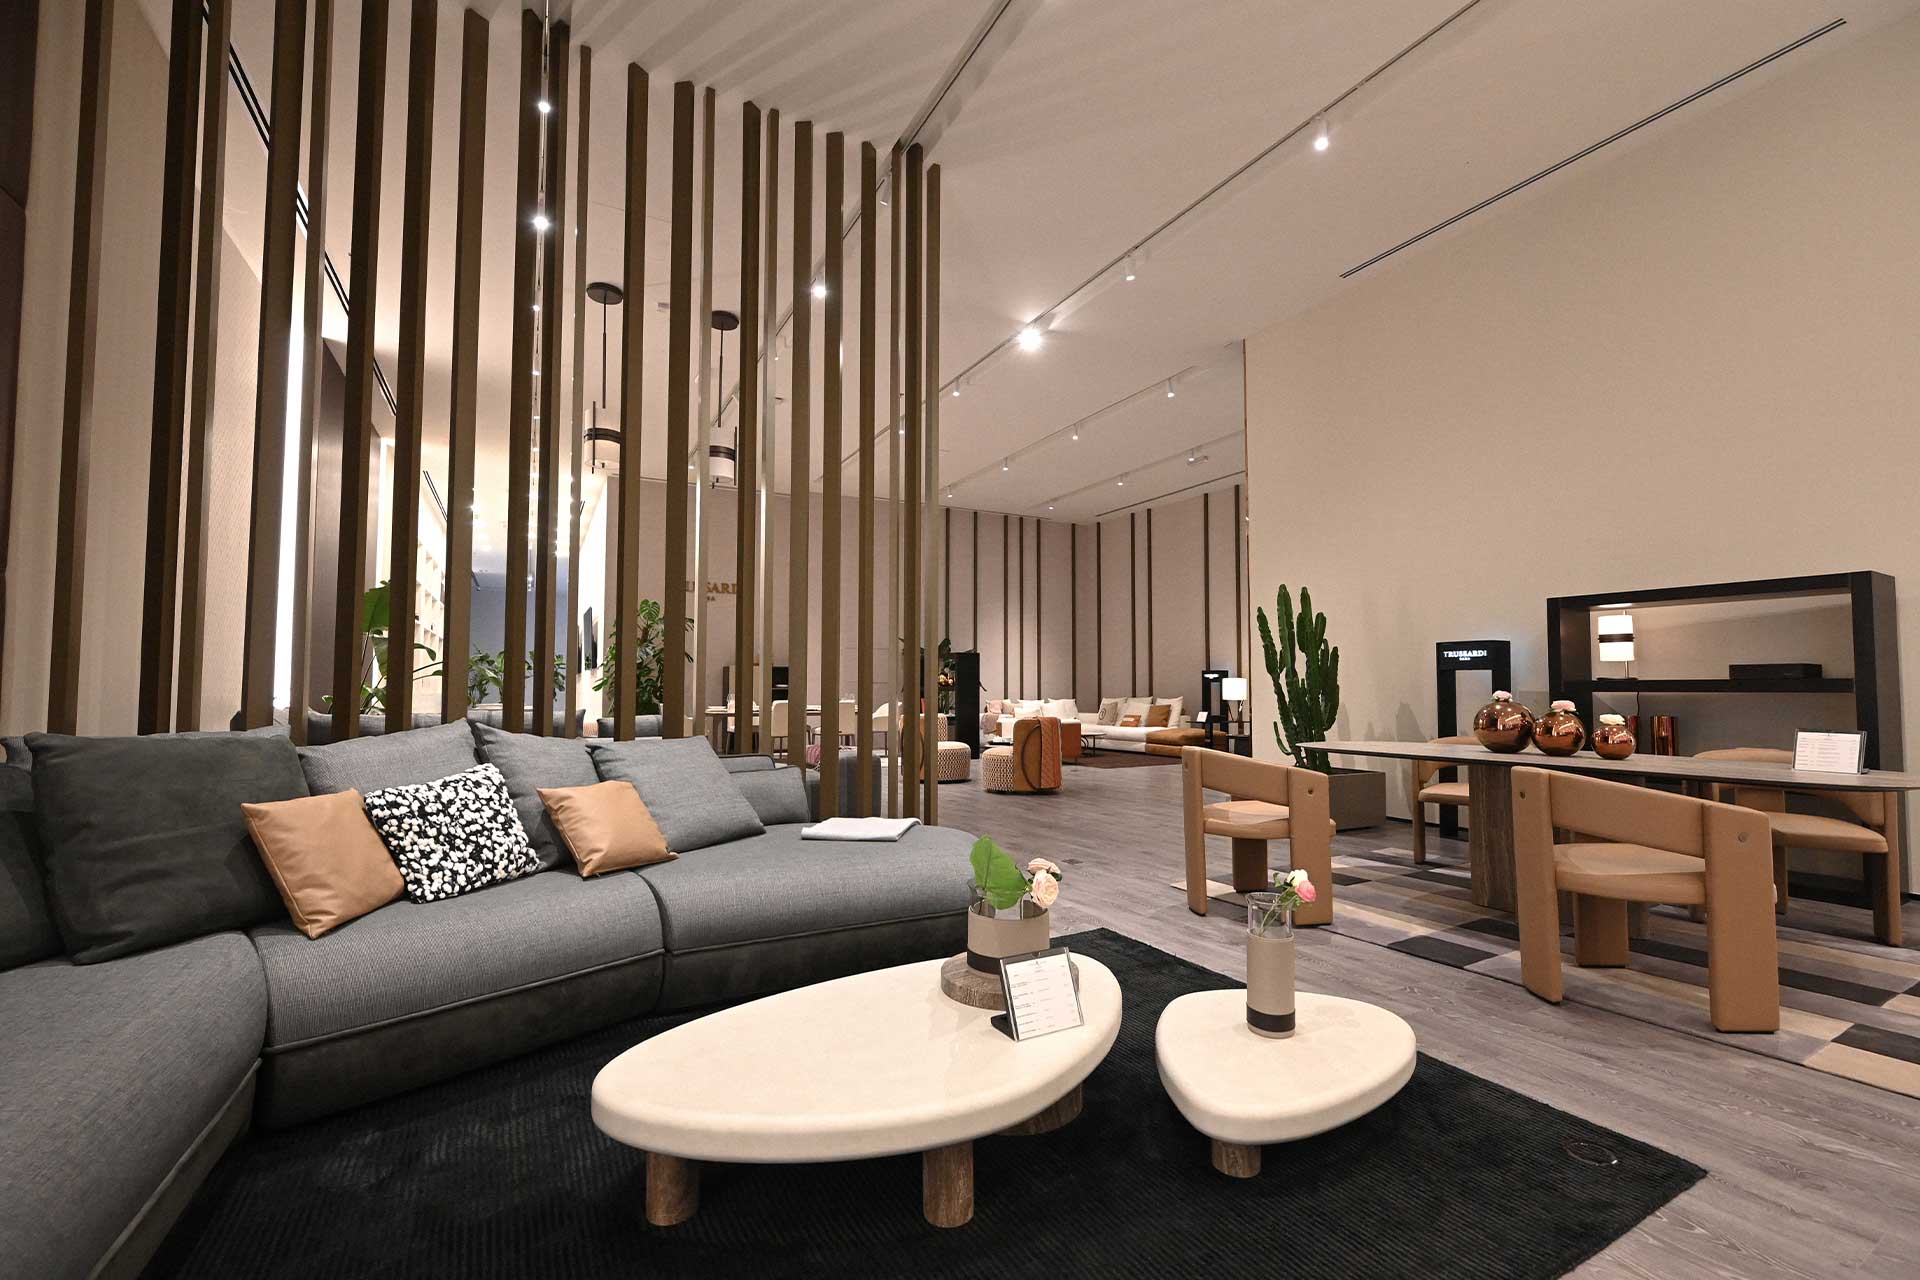 Luxury Living - Interior Design of Luxury Furniture Store Mall of Qatar